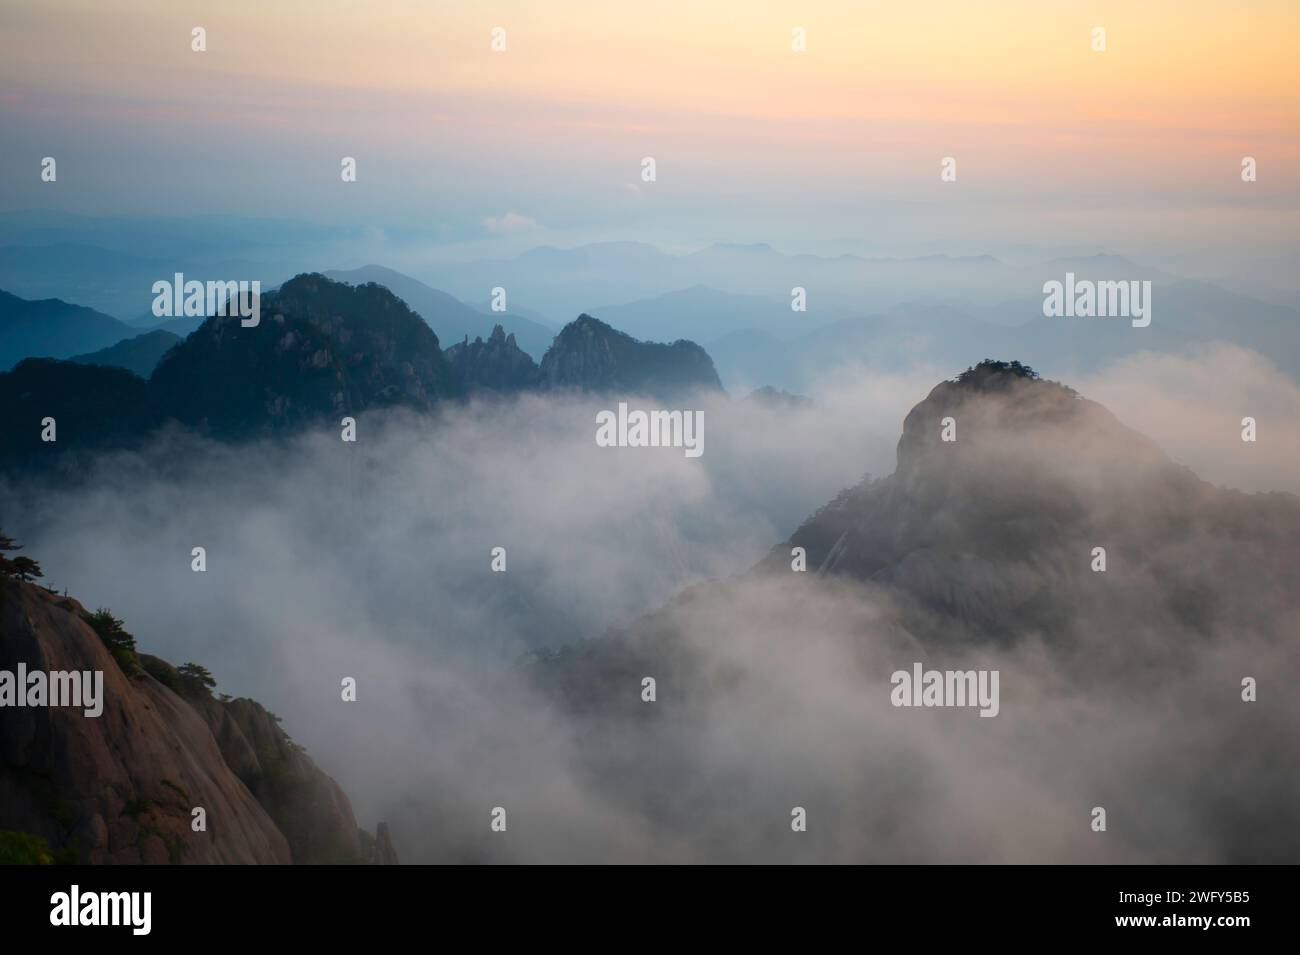 Le nuvole affondano pesantemente tra le montagne nella White Cloud Scenic area nelle Huangshan Yellow Mountains. Foto Stock